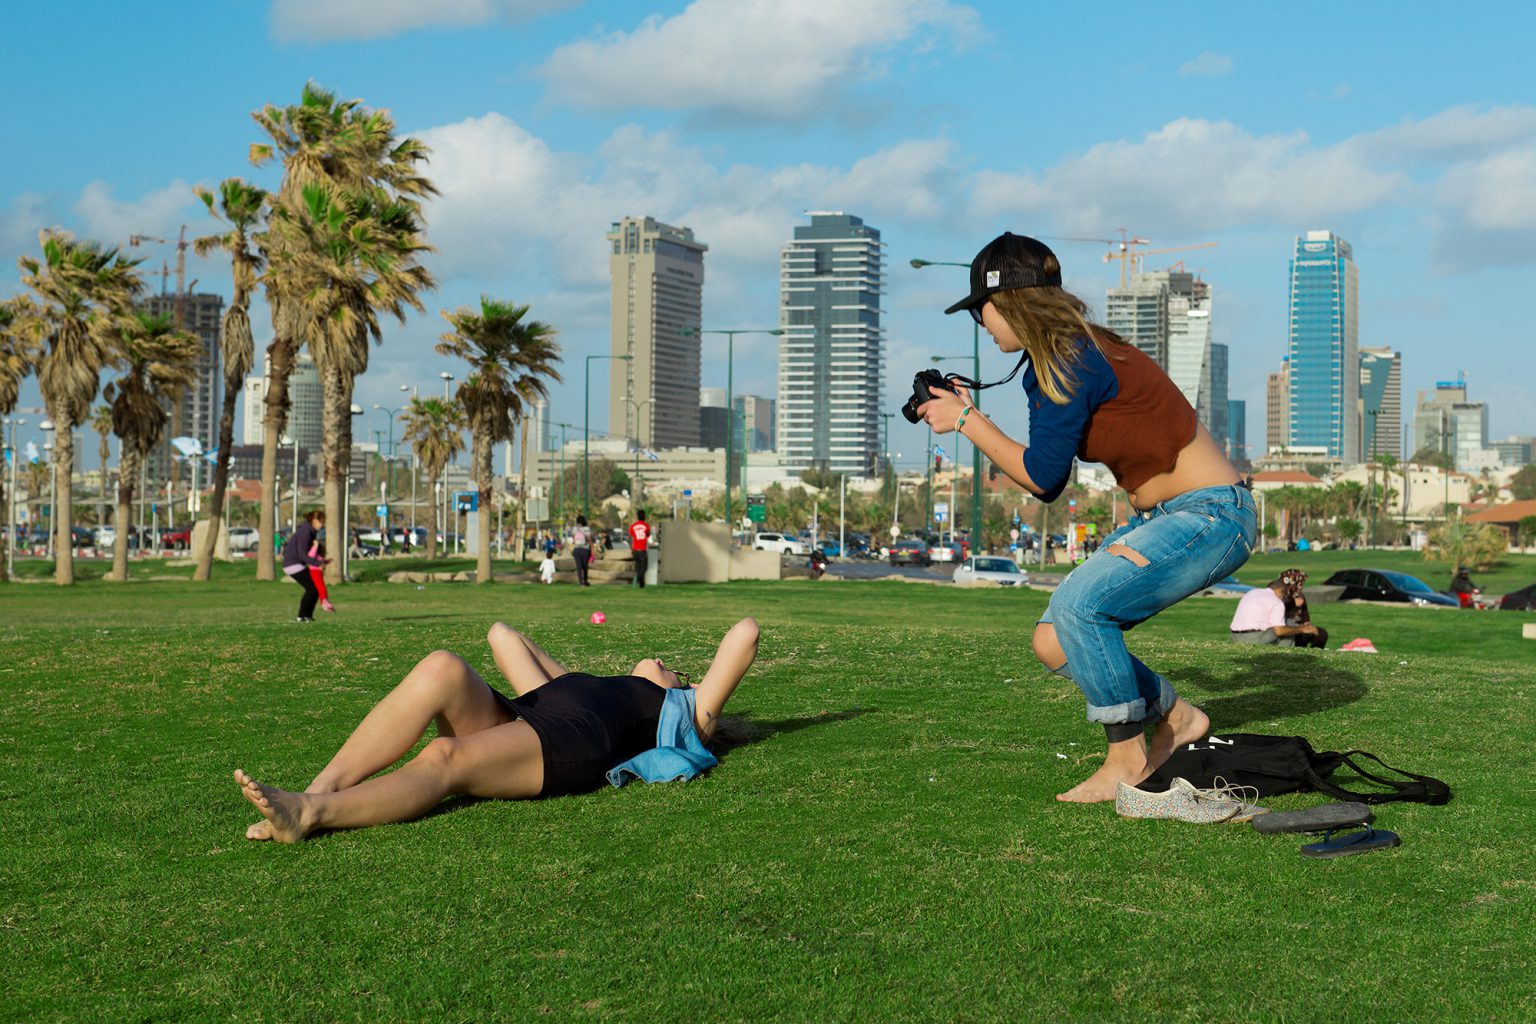 Tel Aviv Jaffa, Israel